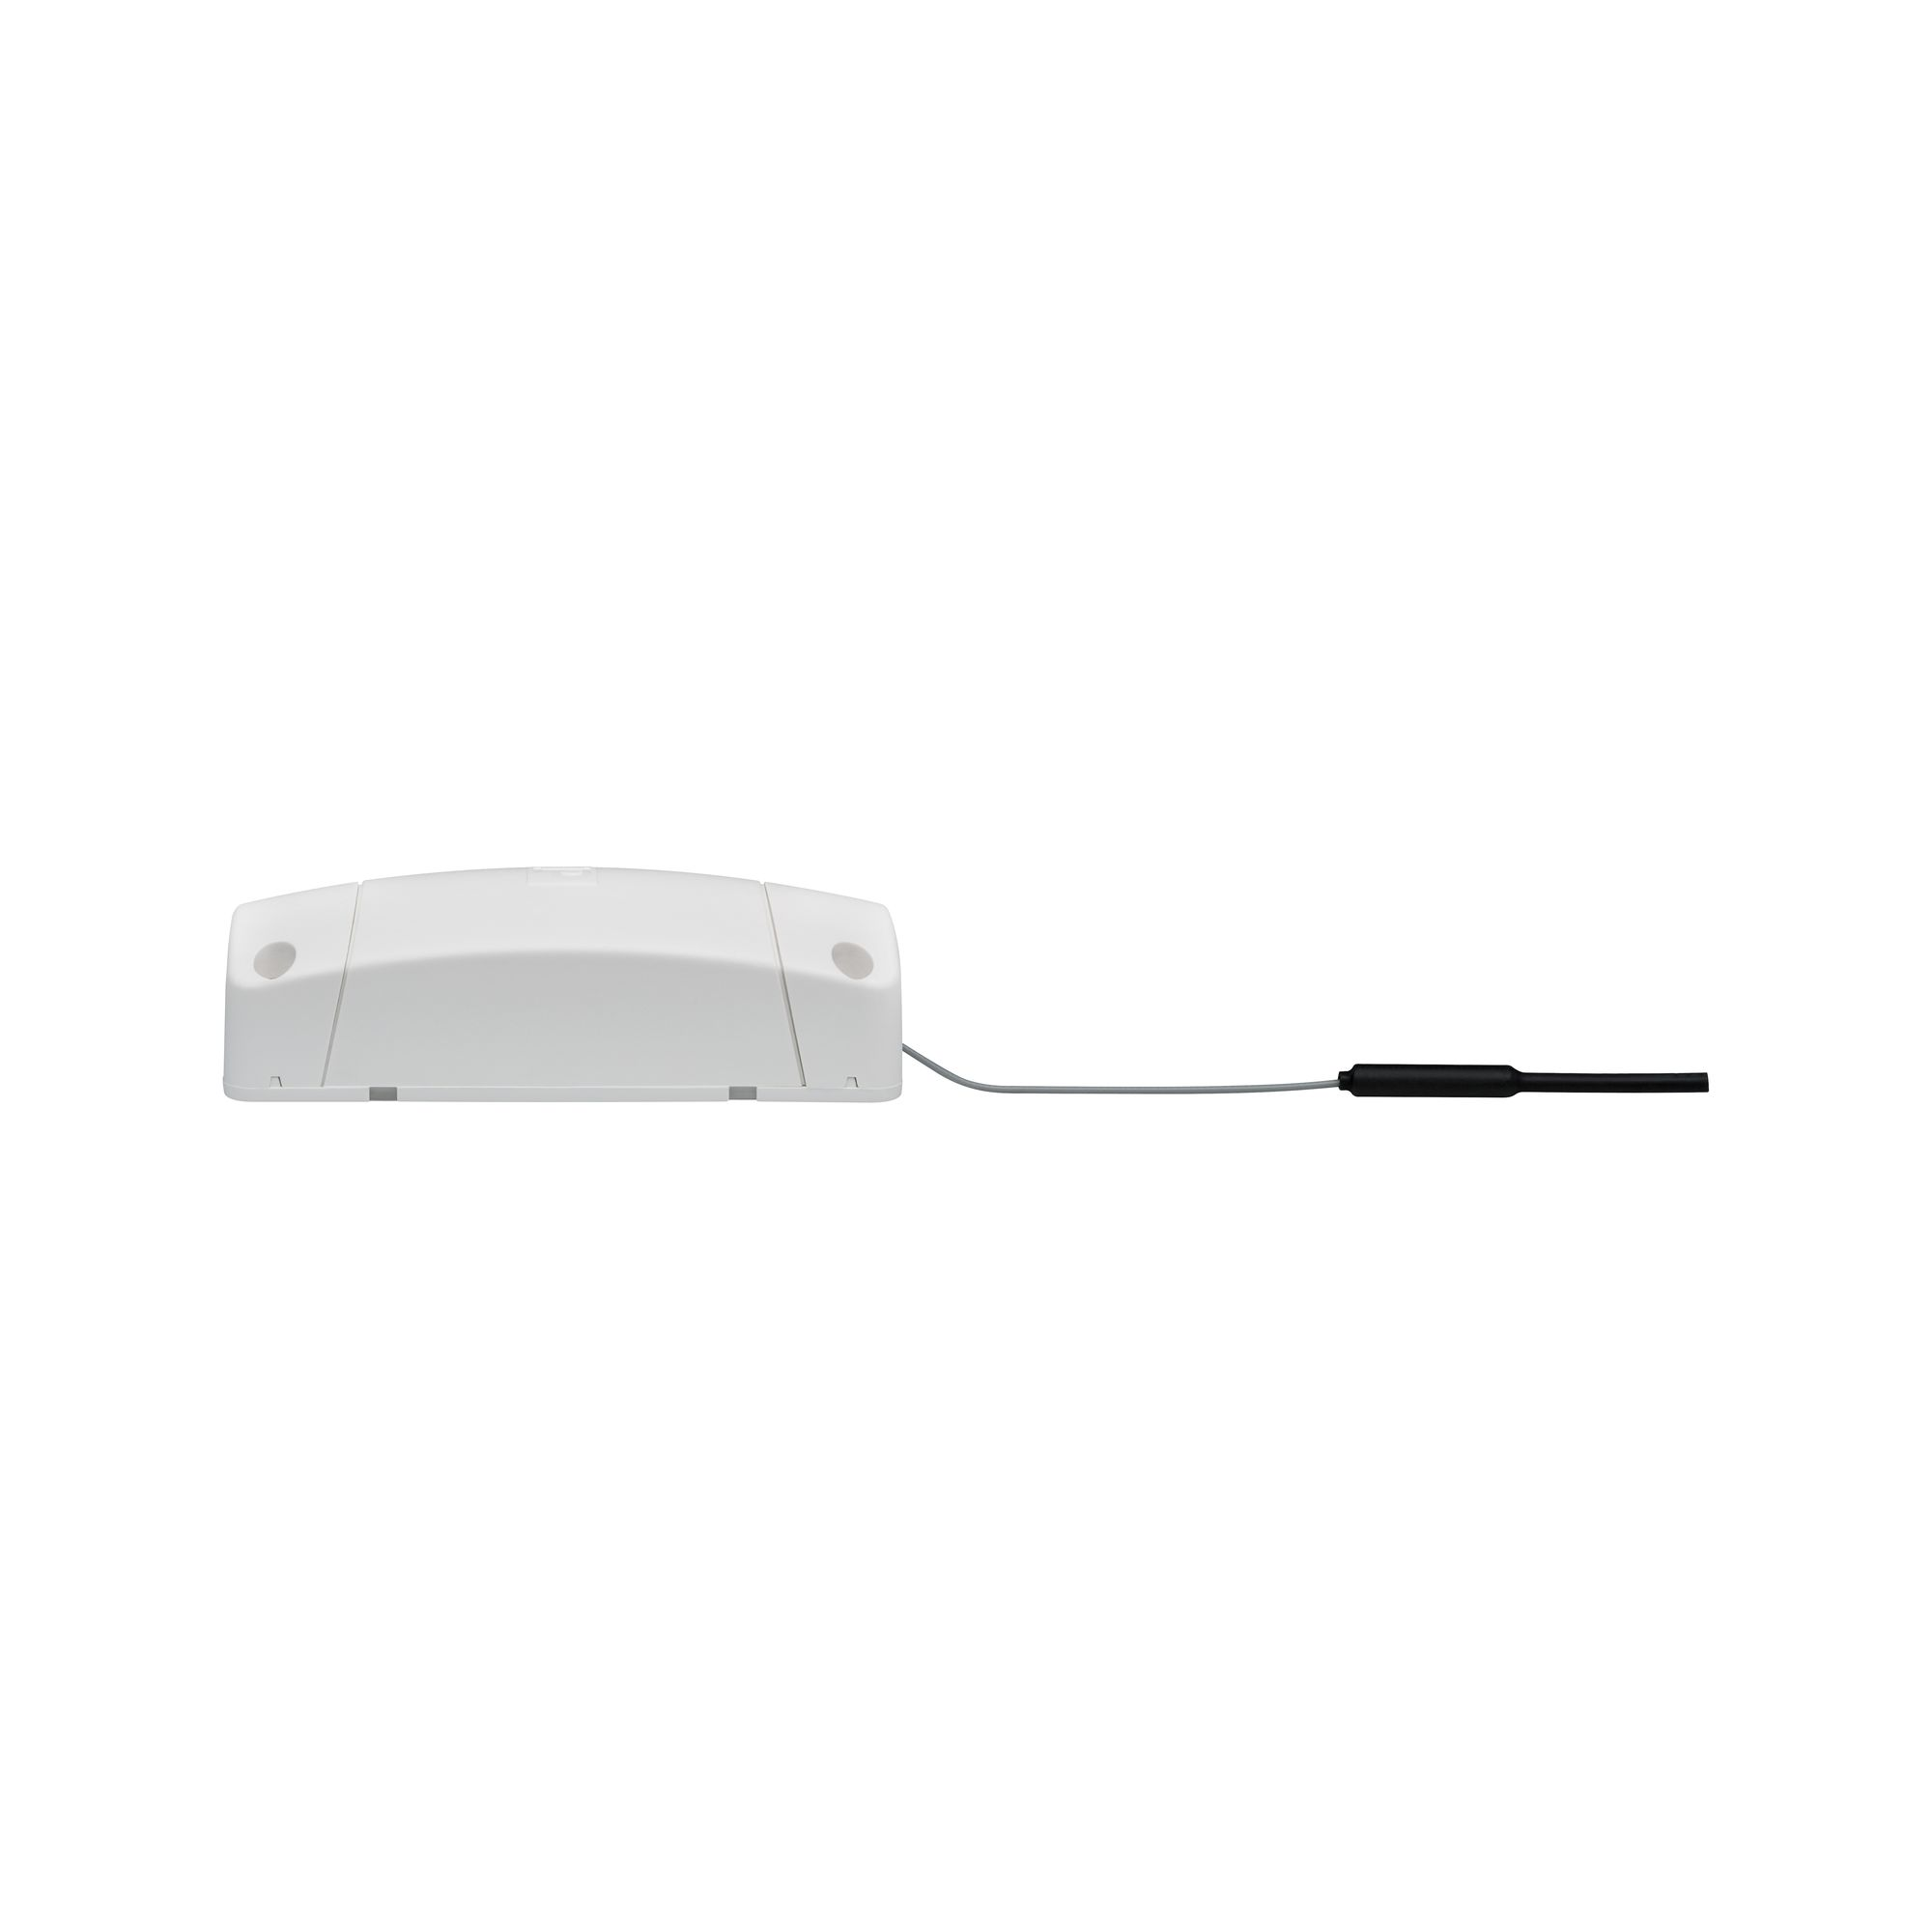 Schalter 'SmartHome Cephei' max. 1000 W 230 V weiß/grau + product picture